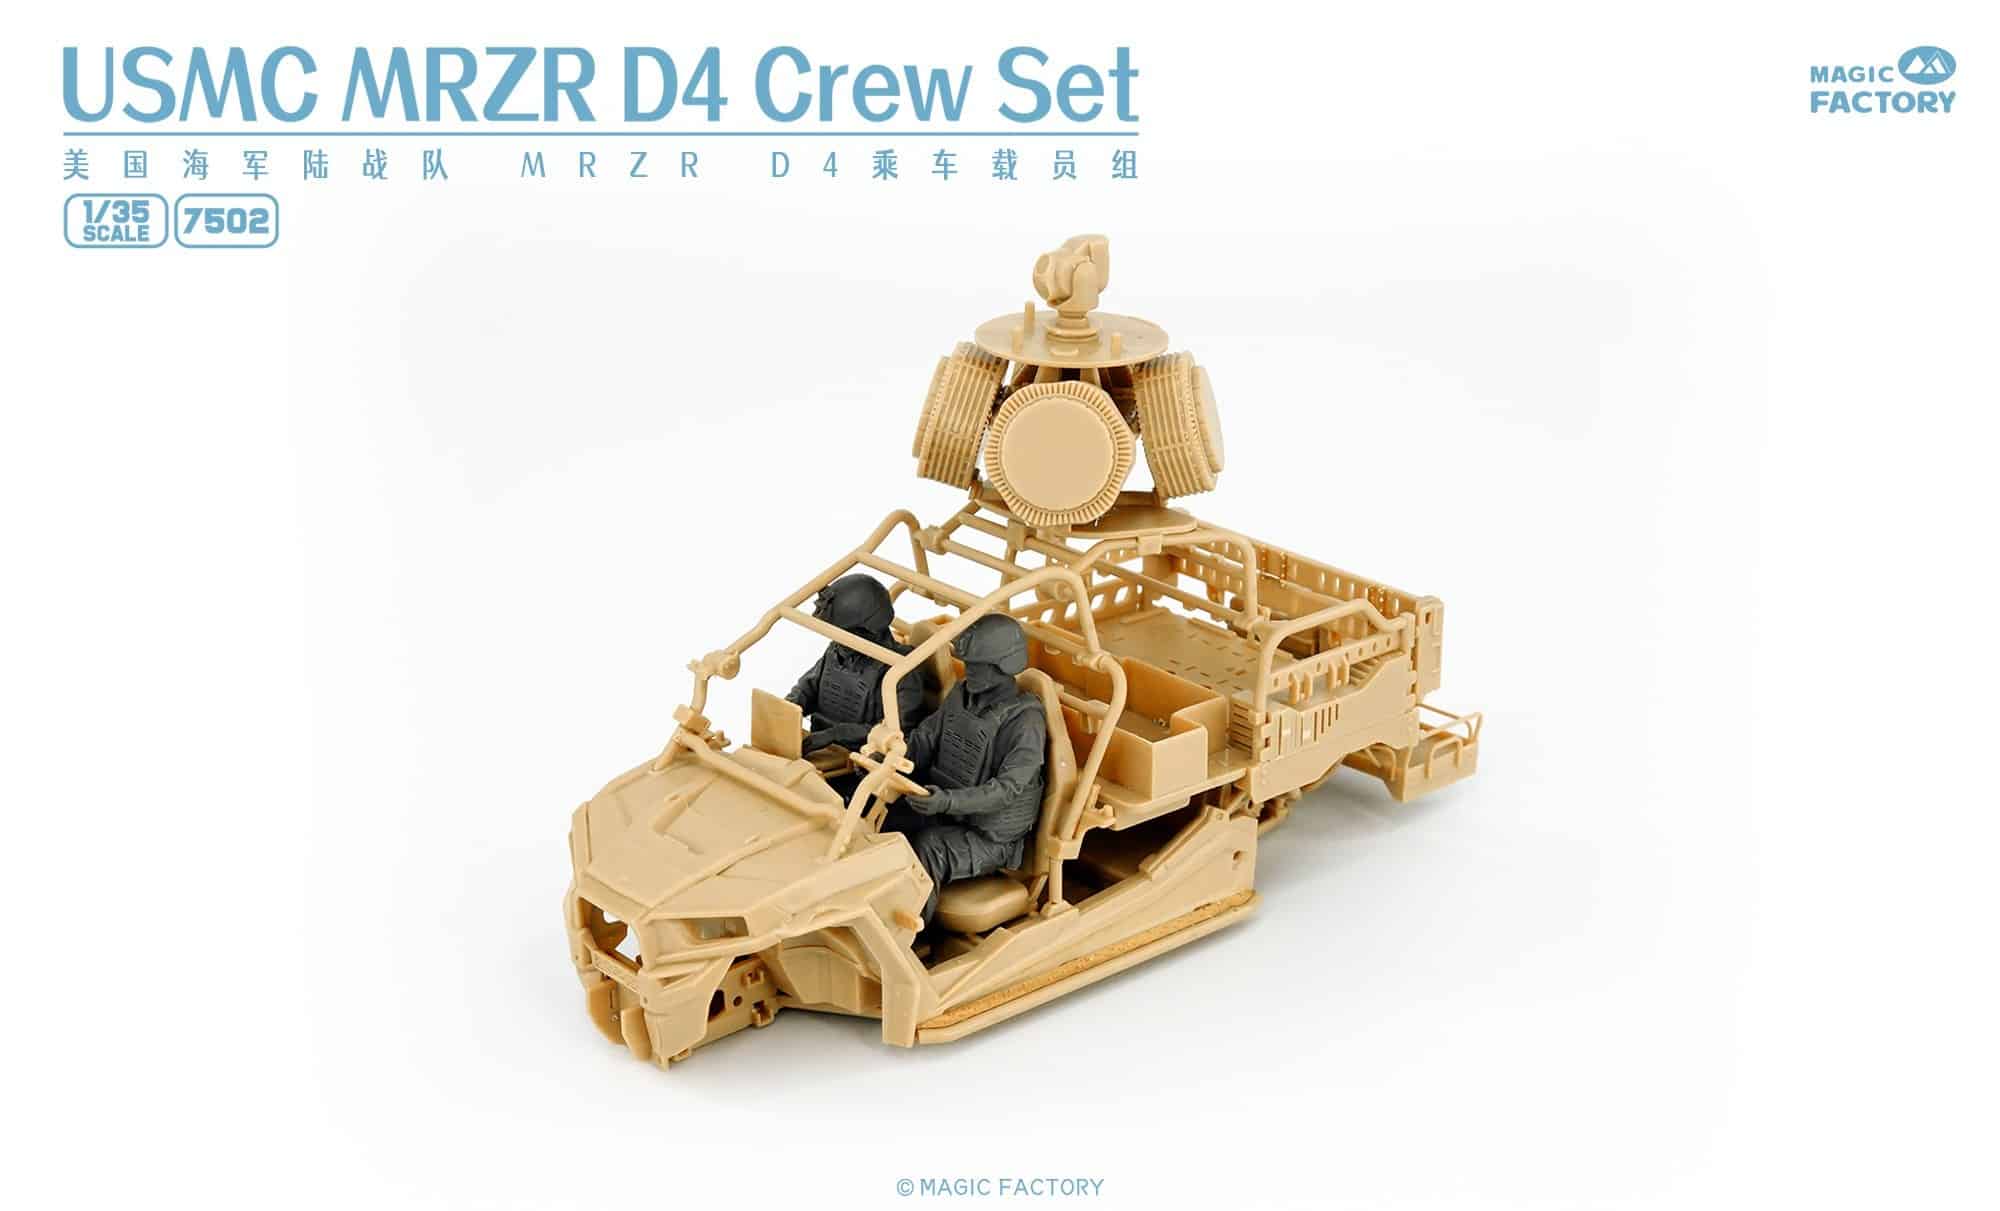 New USMC MRZR D4 Crew Set Available from Magic Factory-3